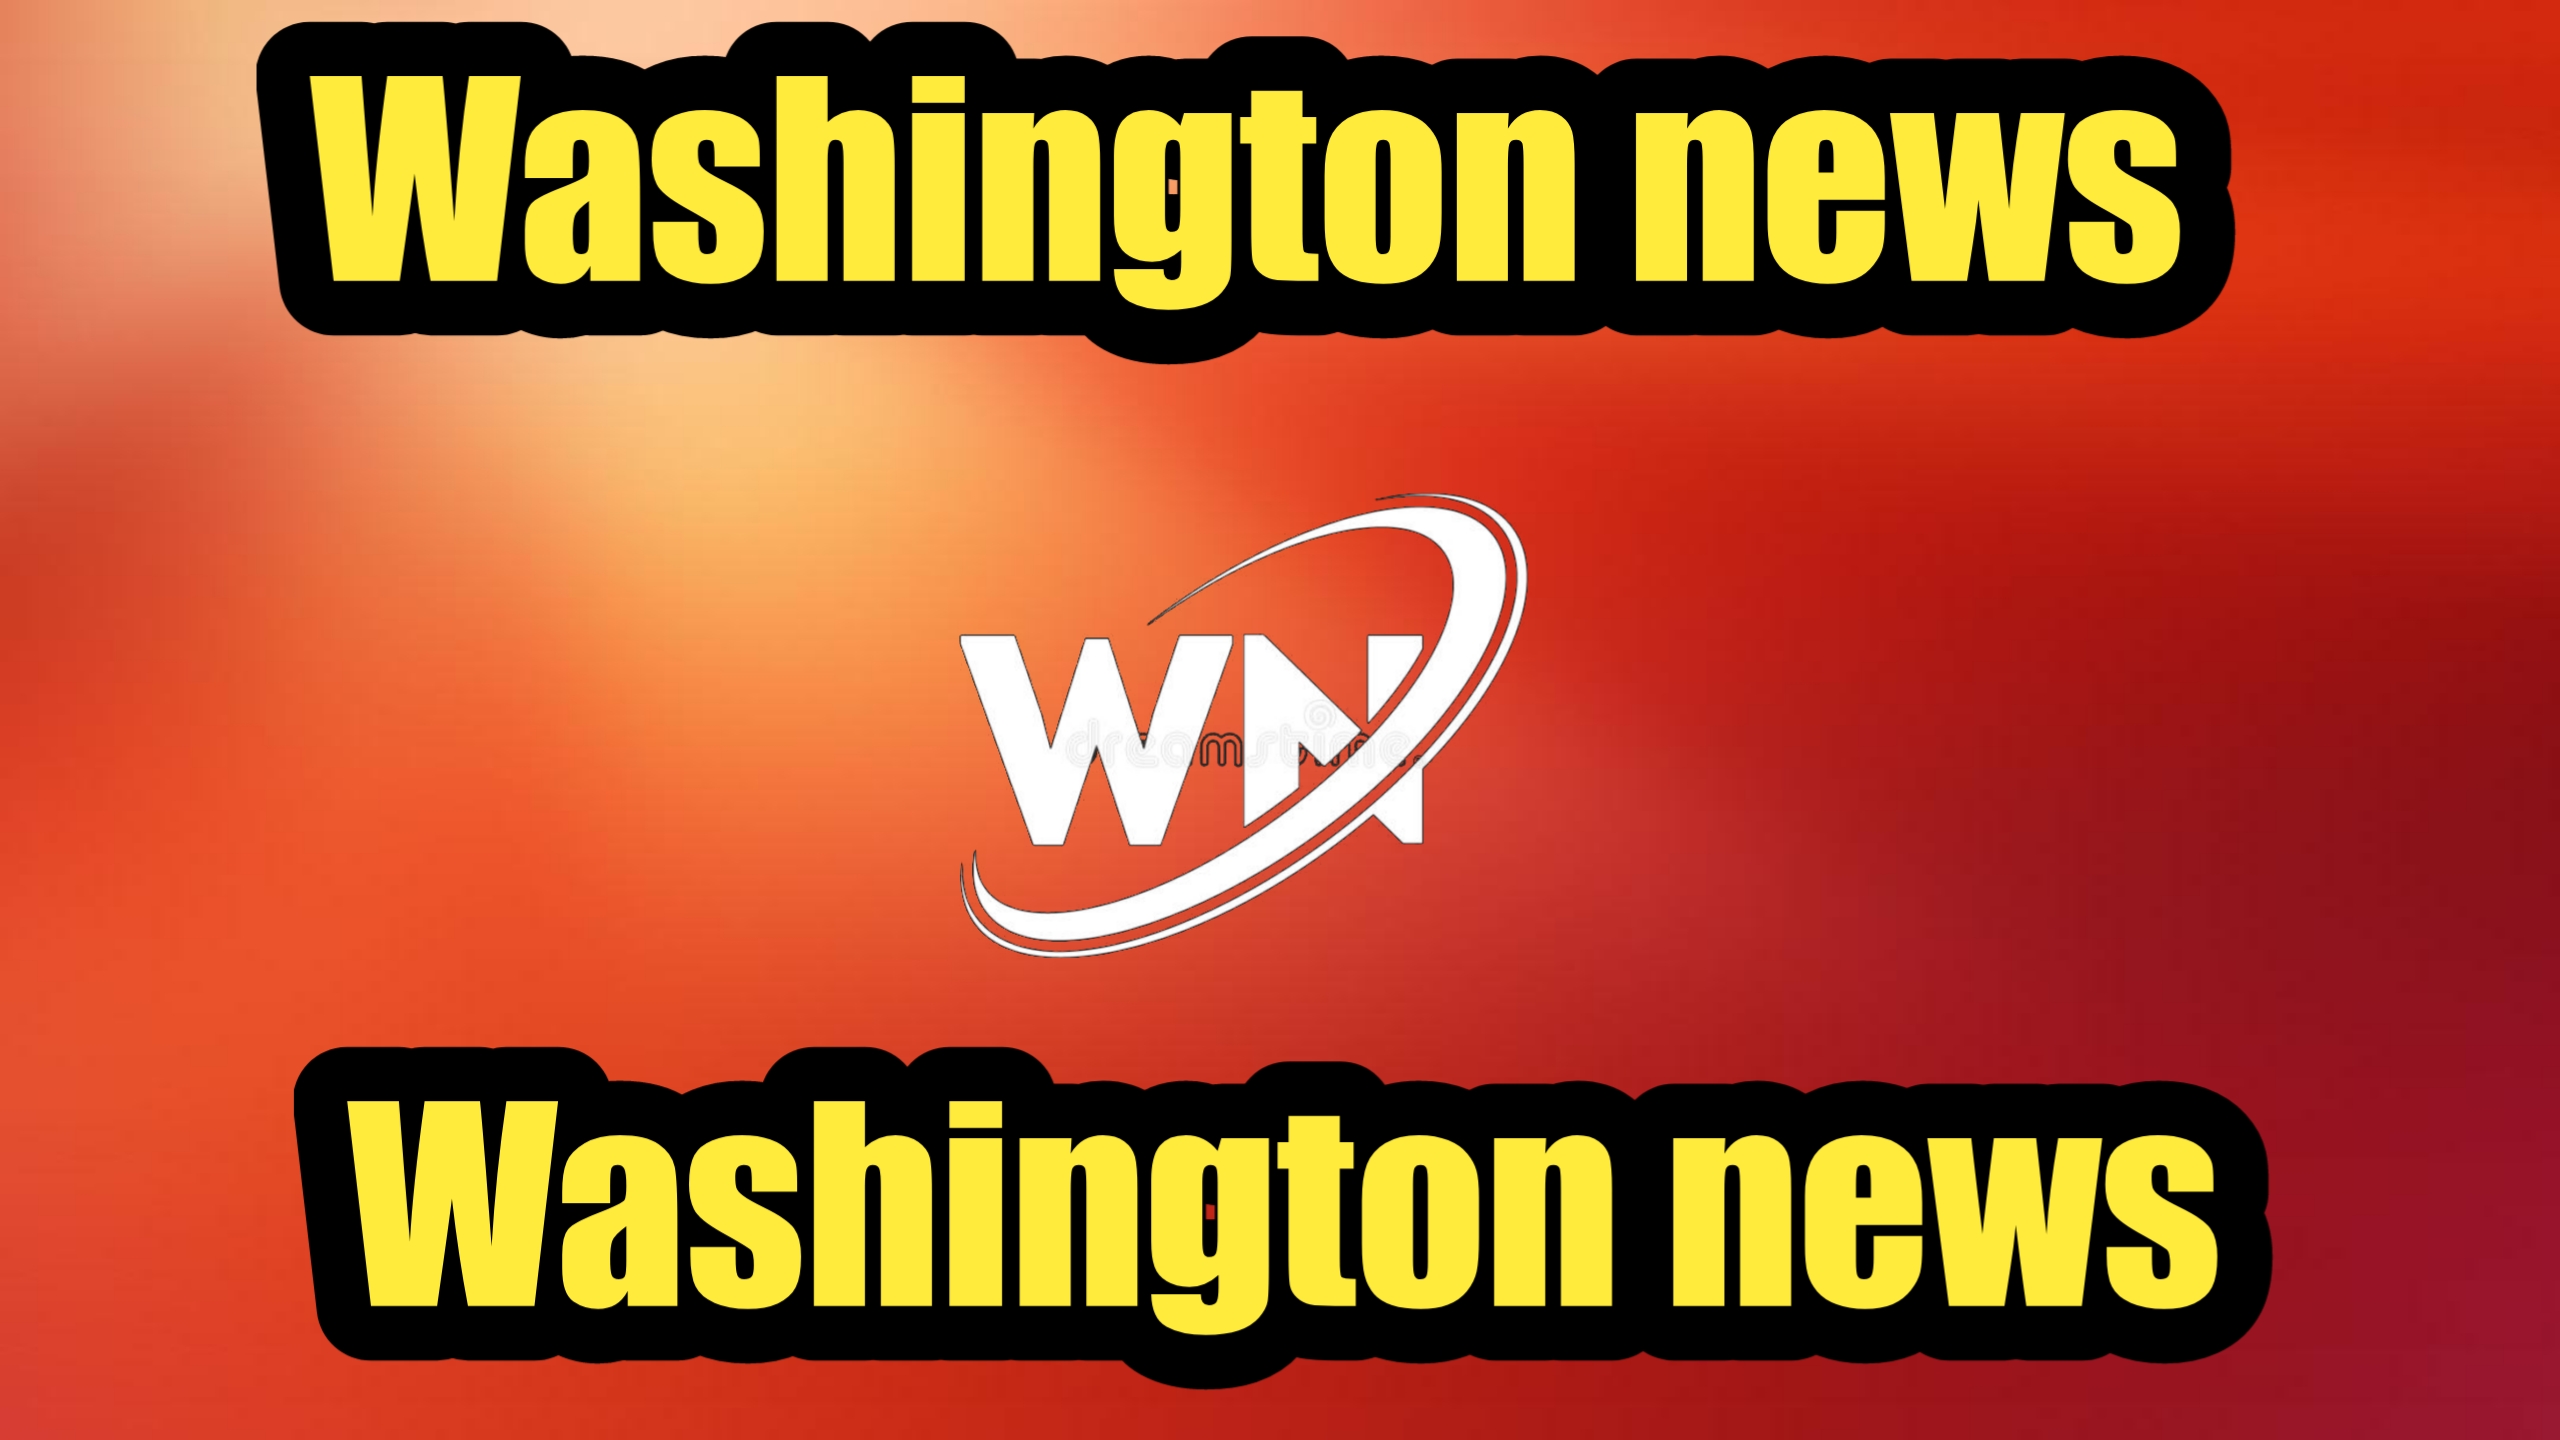 Washington news